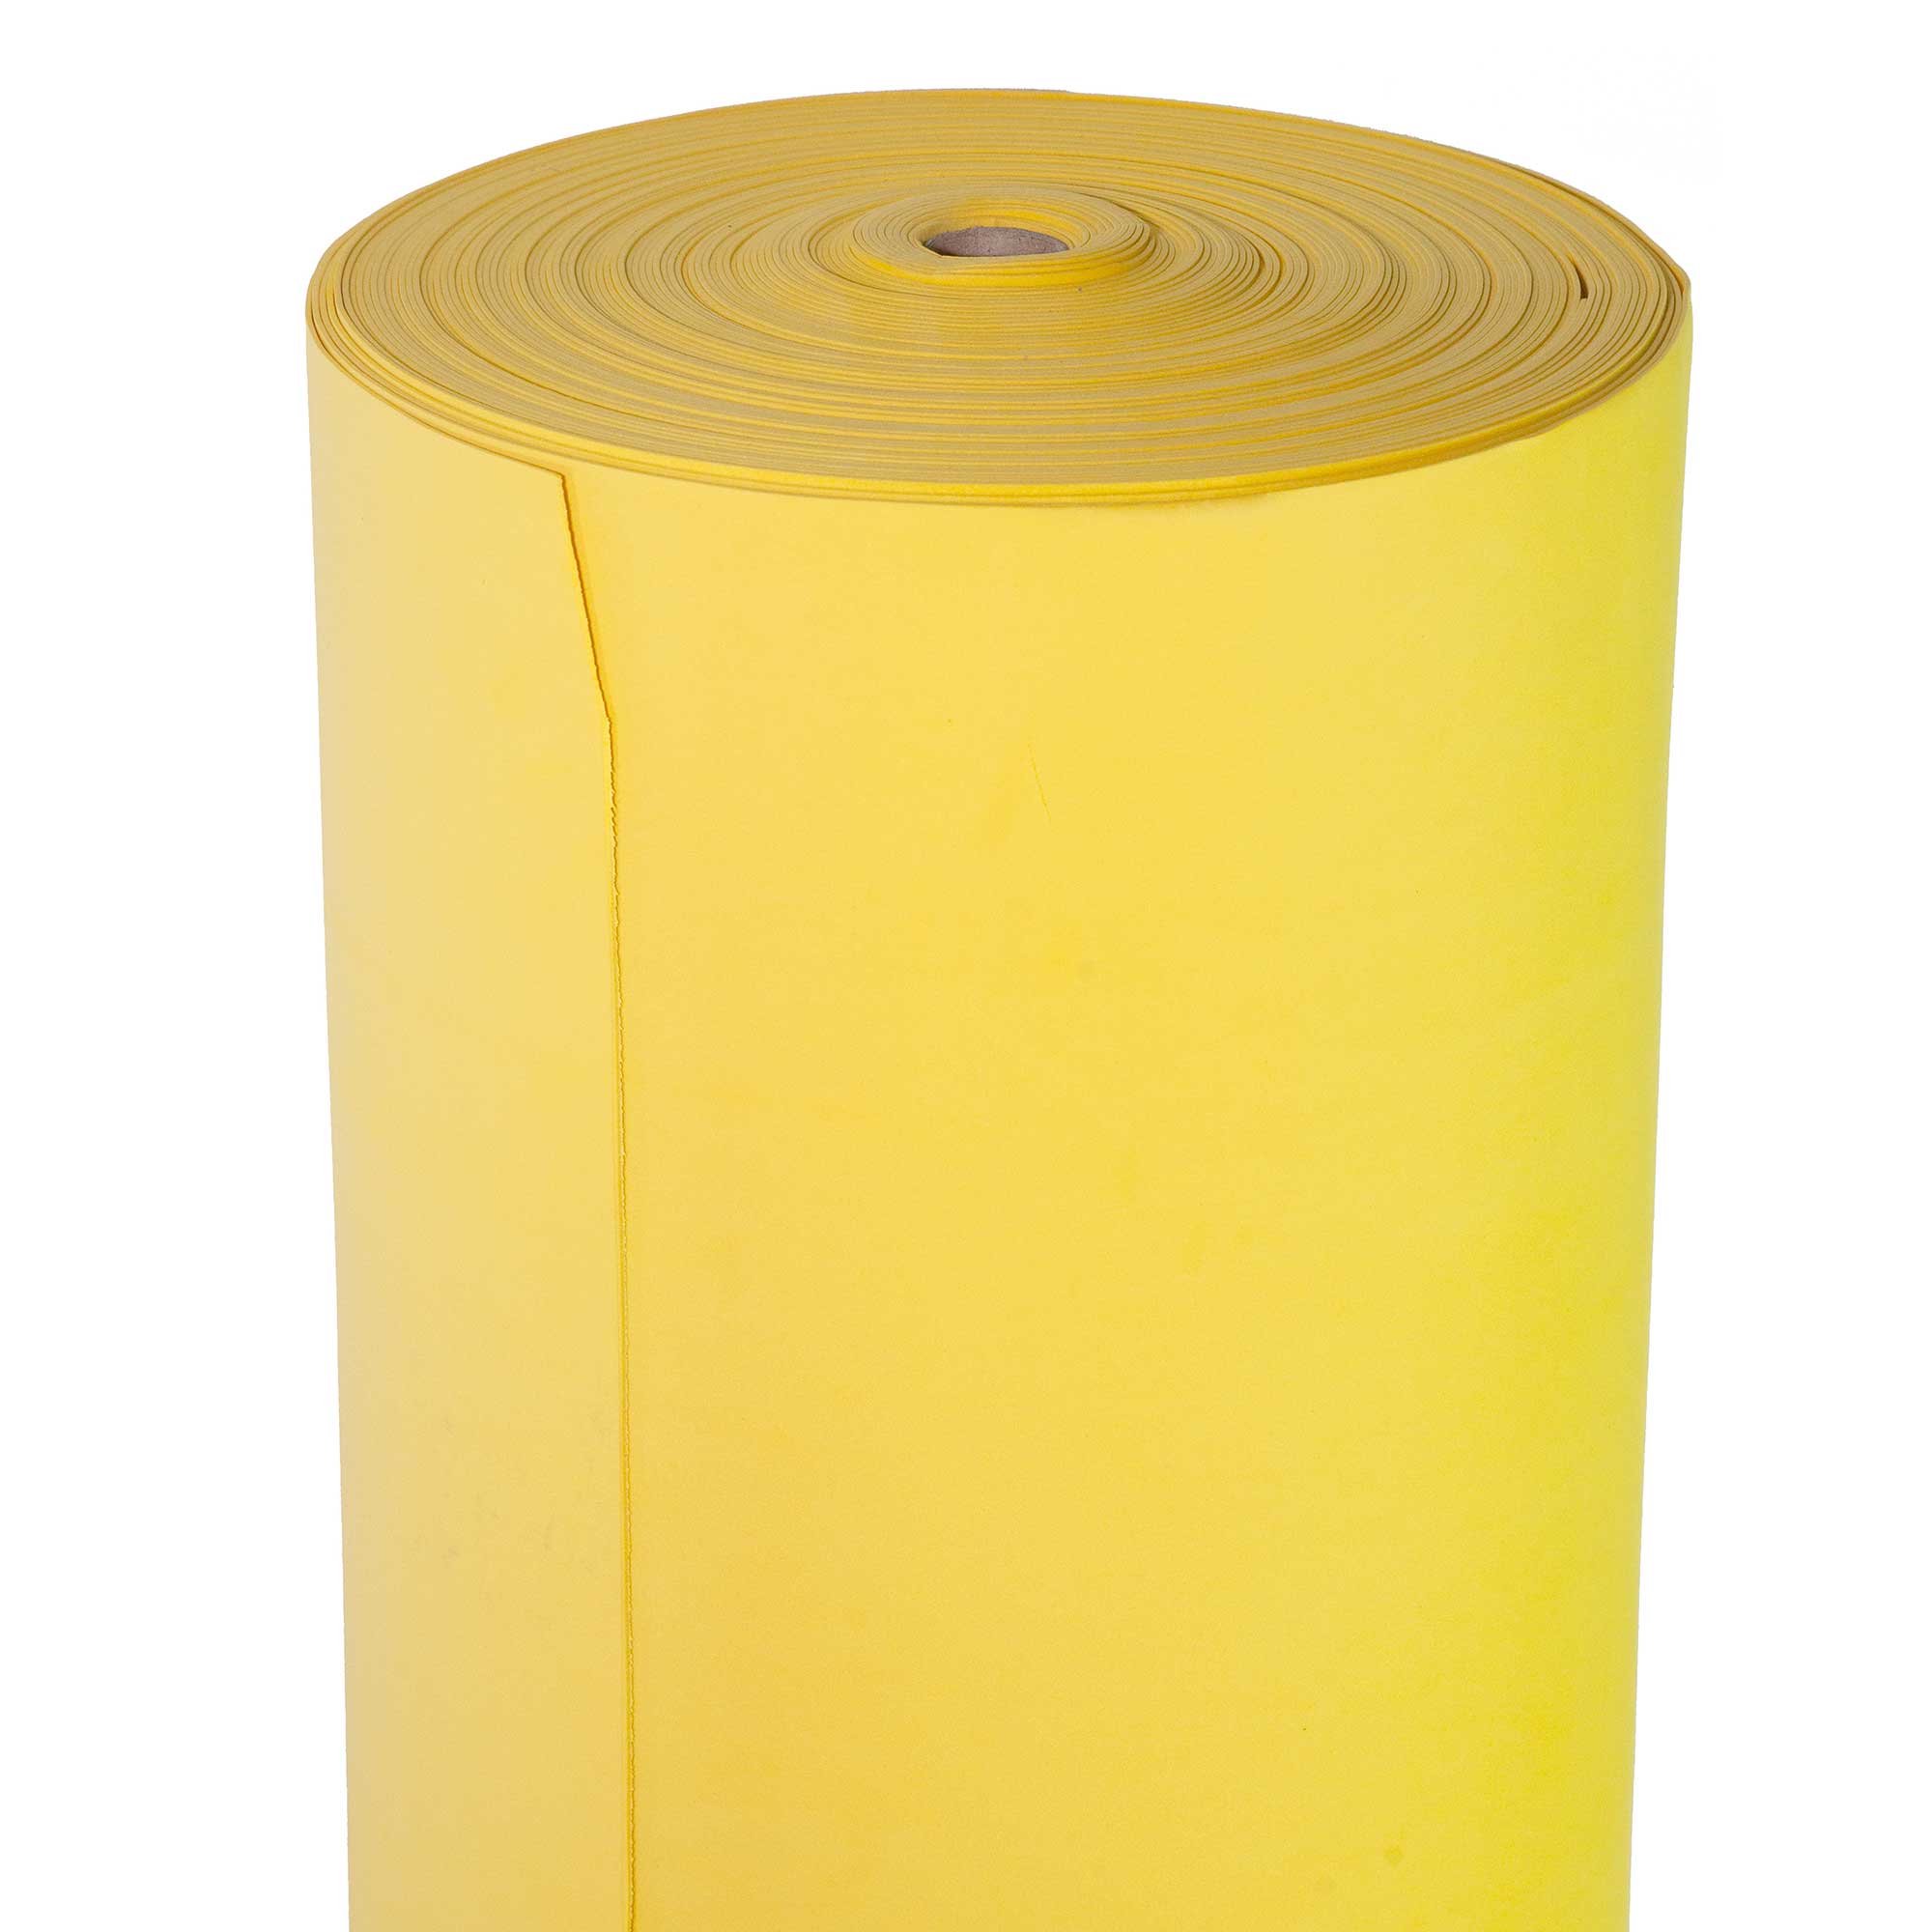 VR-FE4 40T20-R100-HPL7N027 Miele giallo-Медовый желтый Фоамиран. толщина 2мм. в рулоне 50м